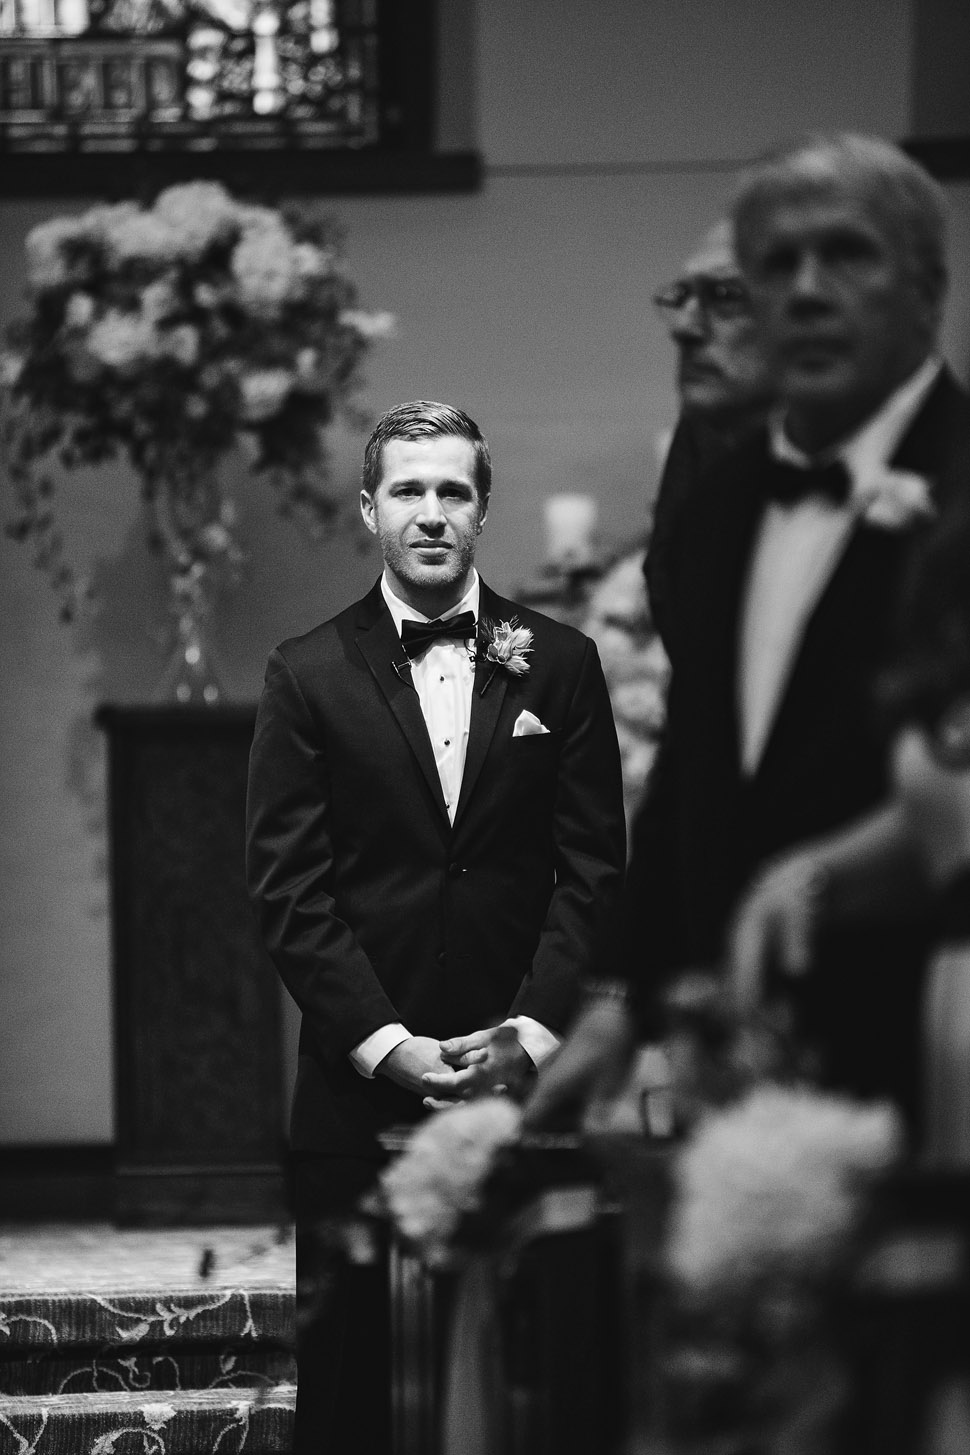 Wedding Ceremony At The Heights Baptist Church, Texas © John Christopher Photographs | Dallas Wedding and Portrait Photographer